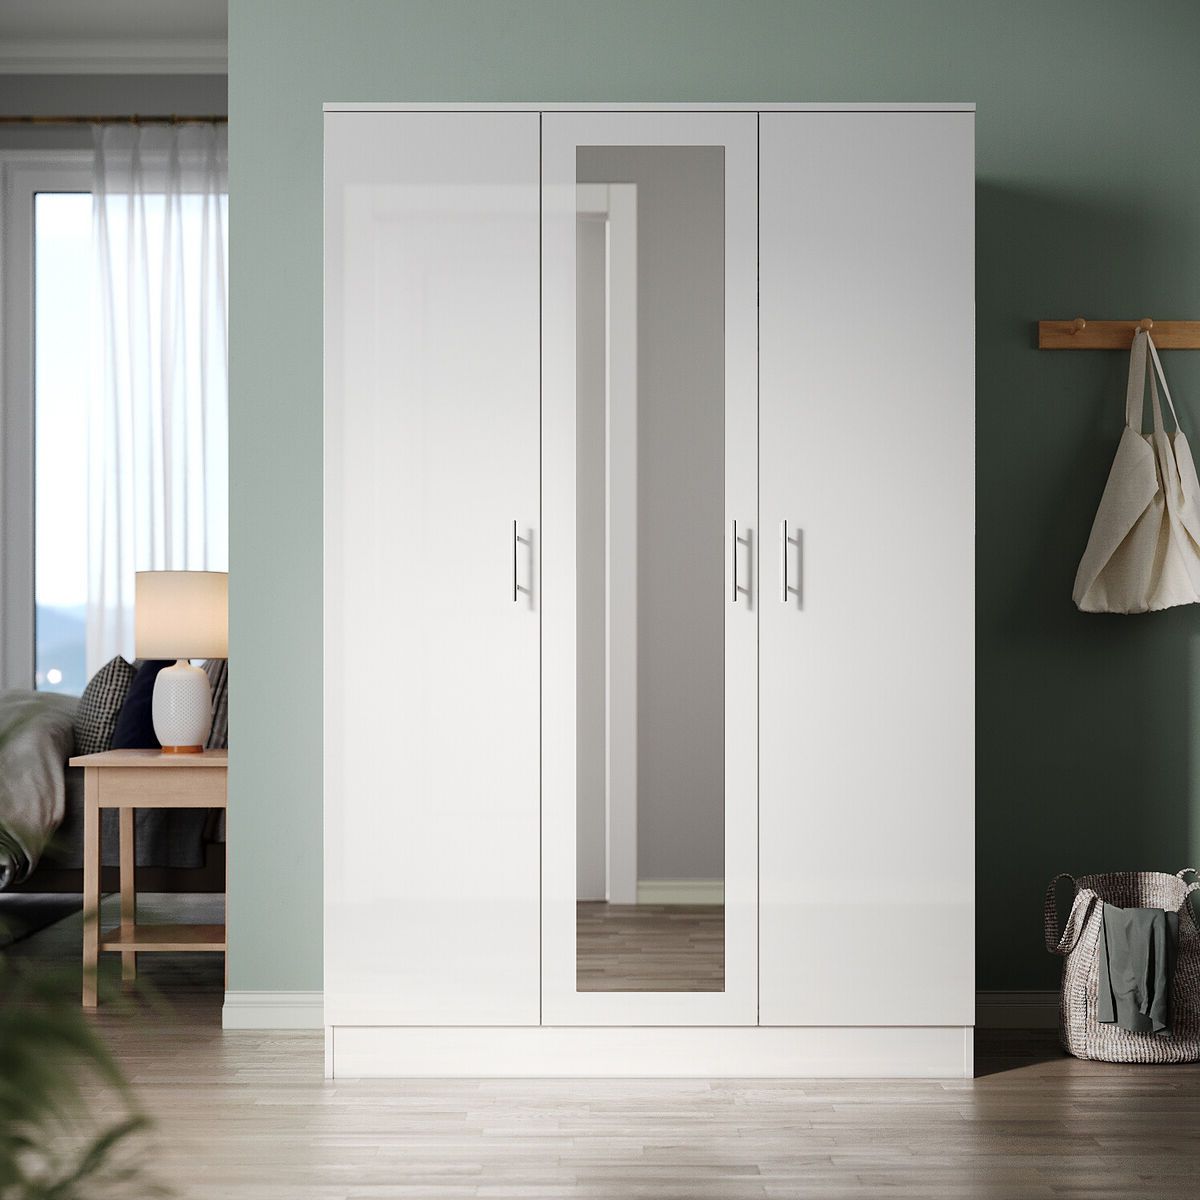 White Gloss 3 Door Triple Mirrored Wardrobe With Hanging Rail & Shelves  Bedroom | Ebay Regarding White Gloss Mirrored Wardrobes (View 17 of 20)